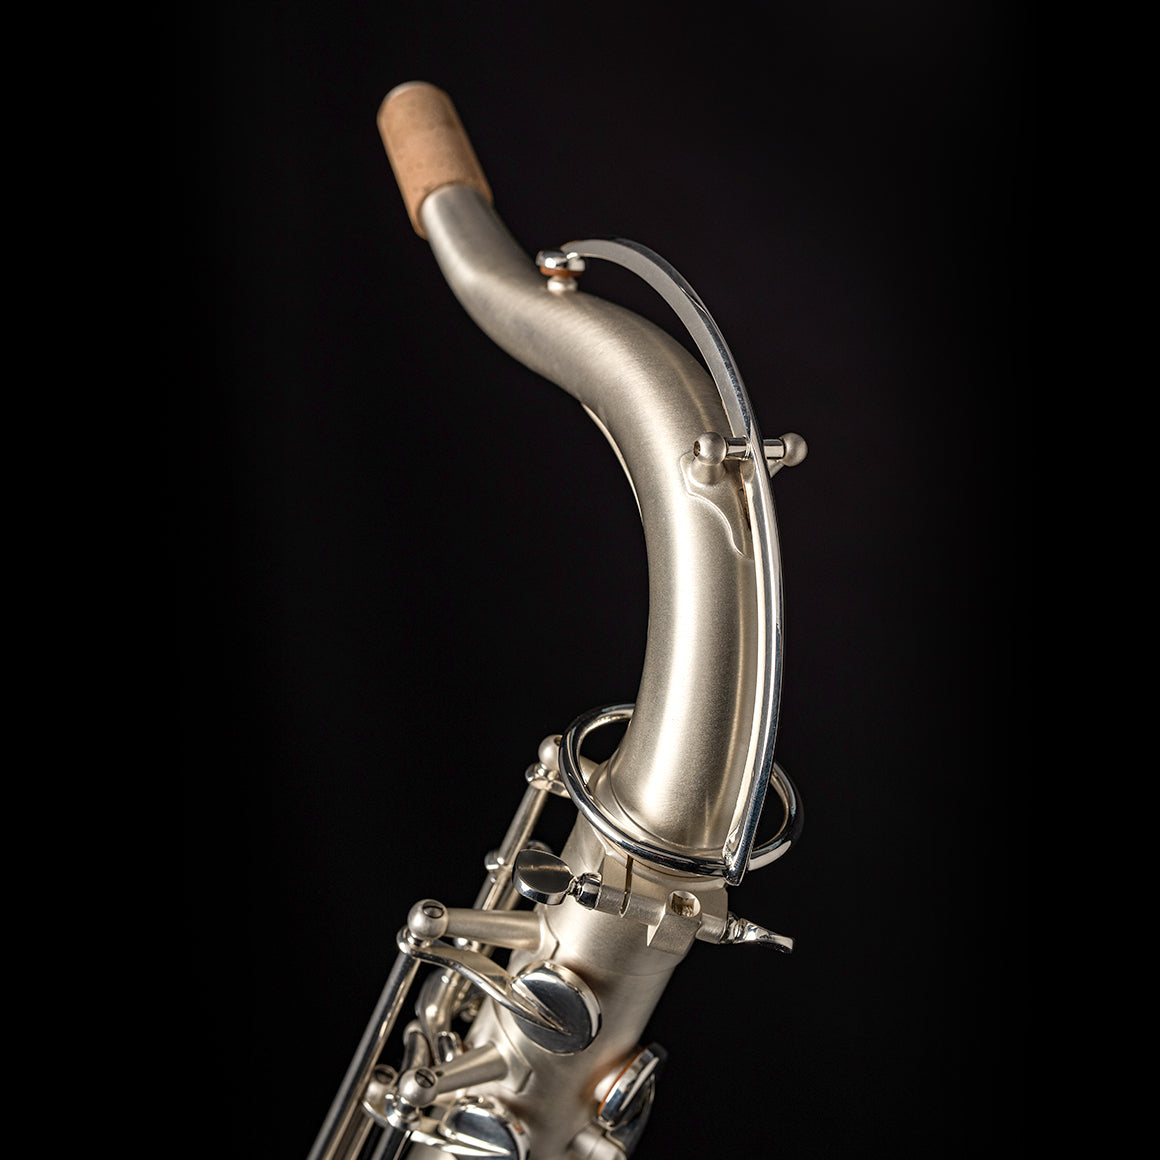 Tenor Saxophone Anchert - Authentic